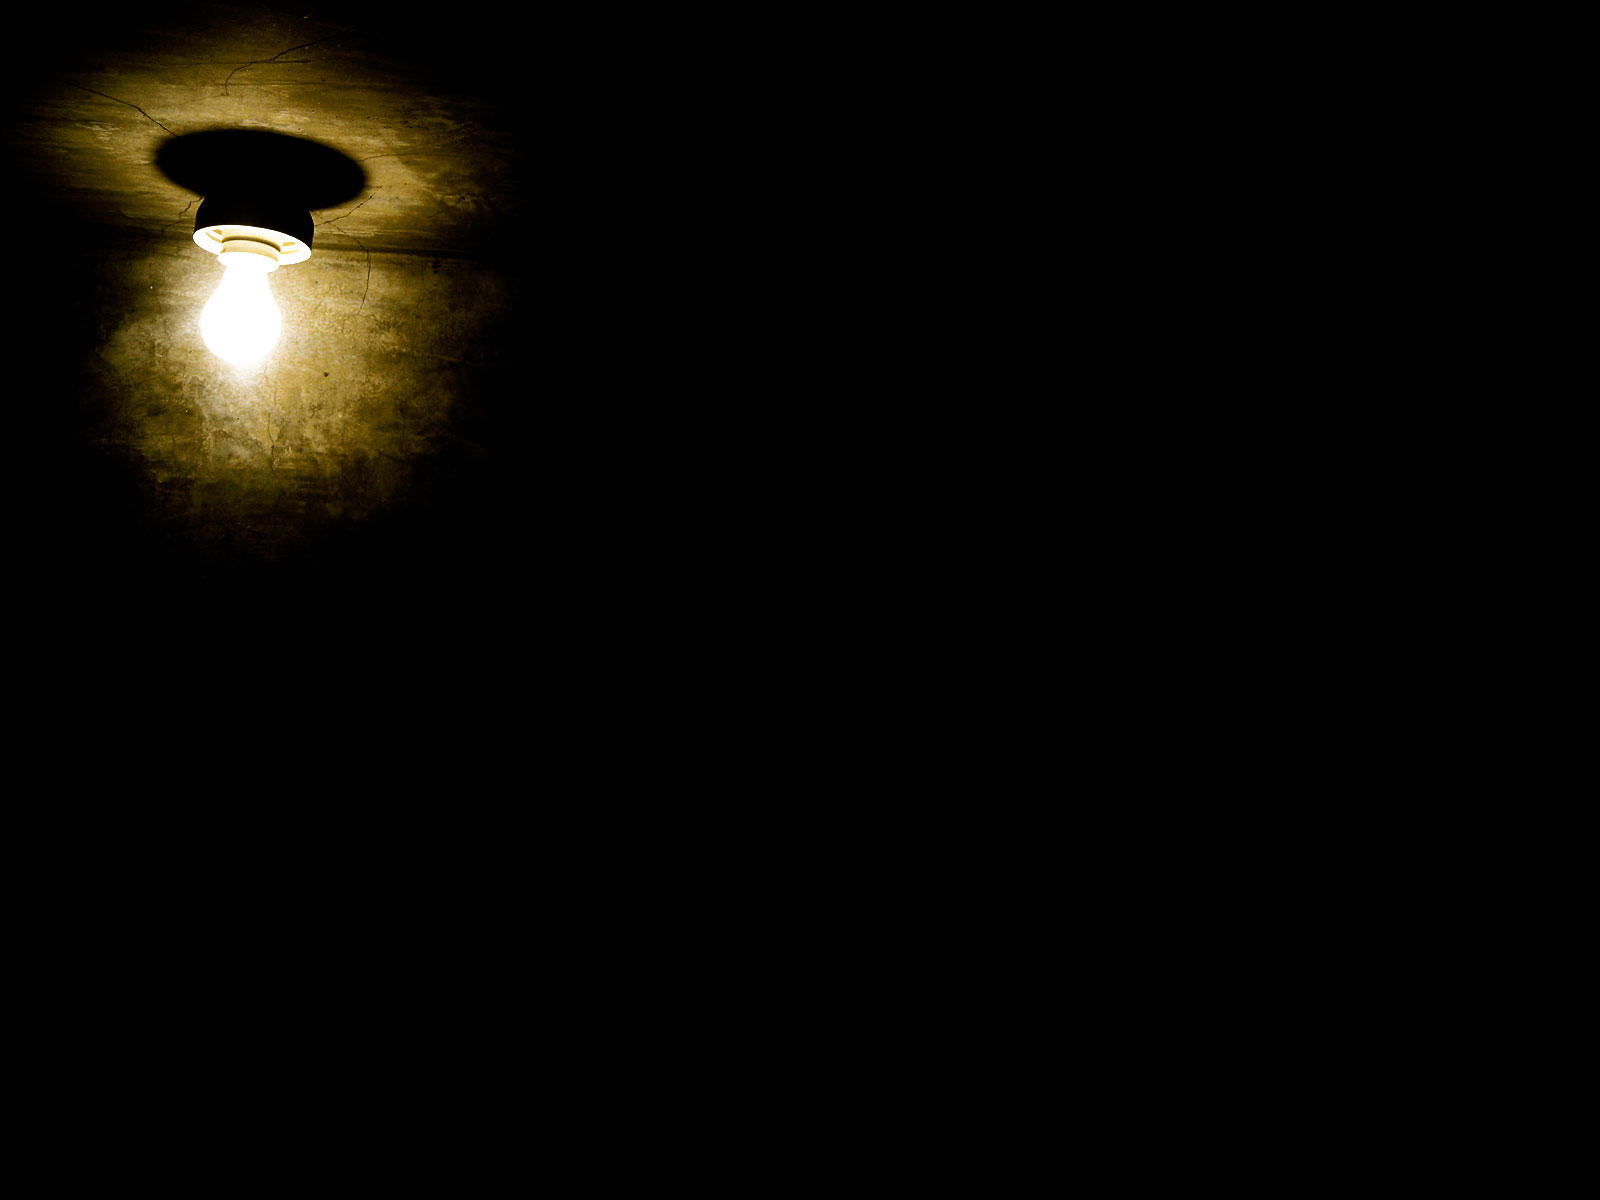 [Image: Little_lamp_in_dark_room.jpg]